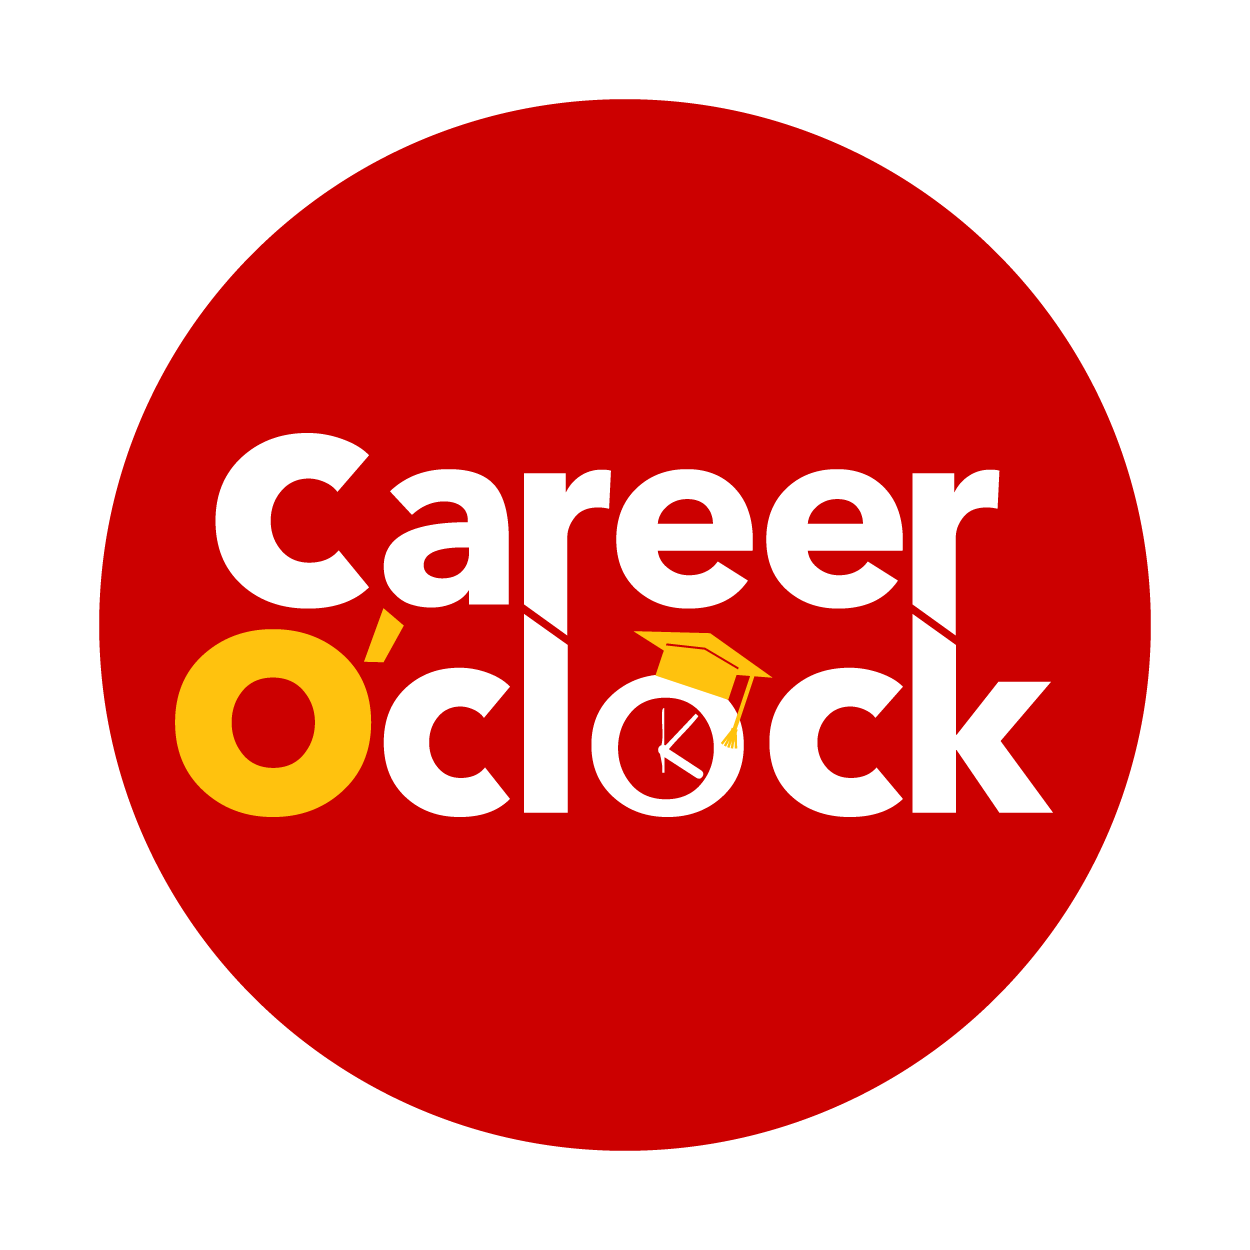 Career O'clock